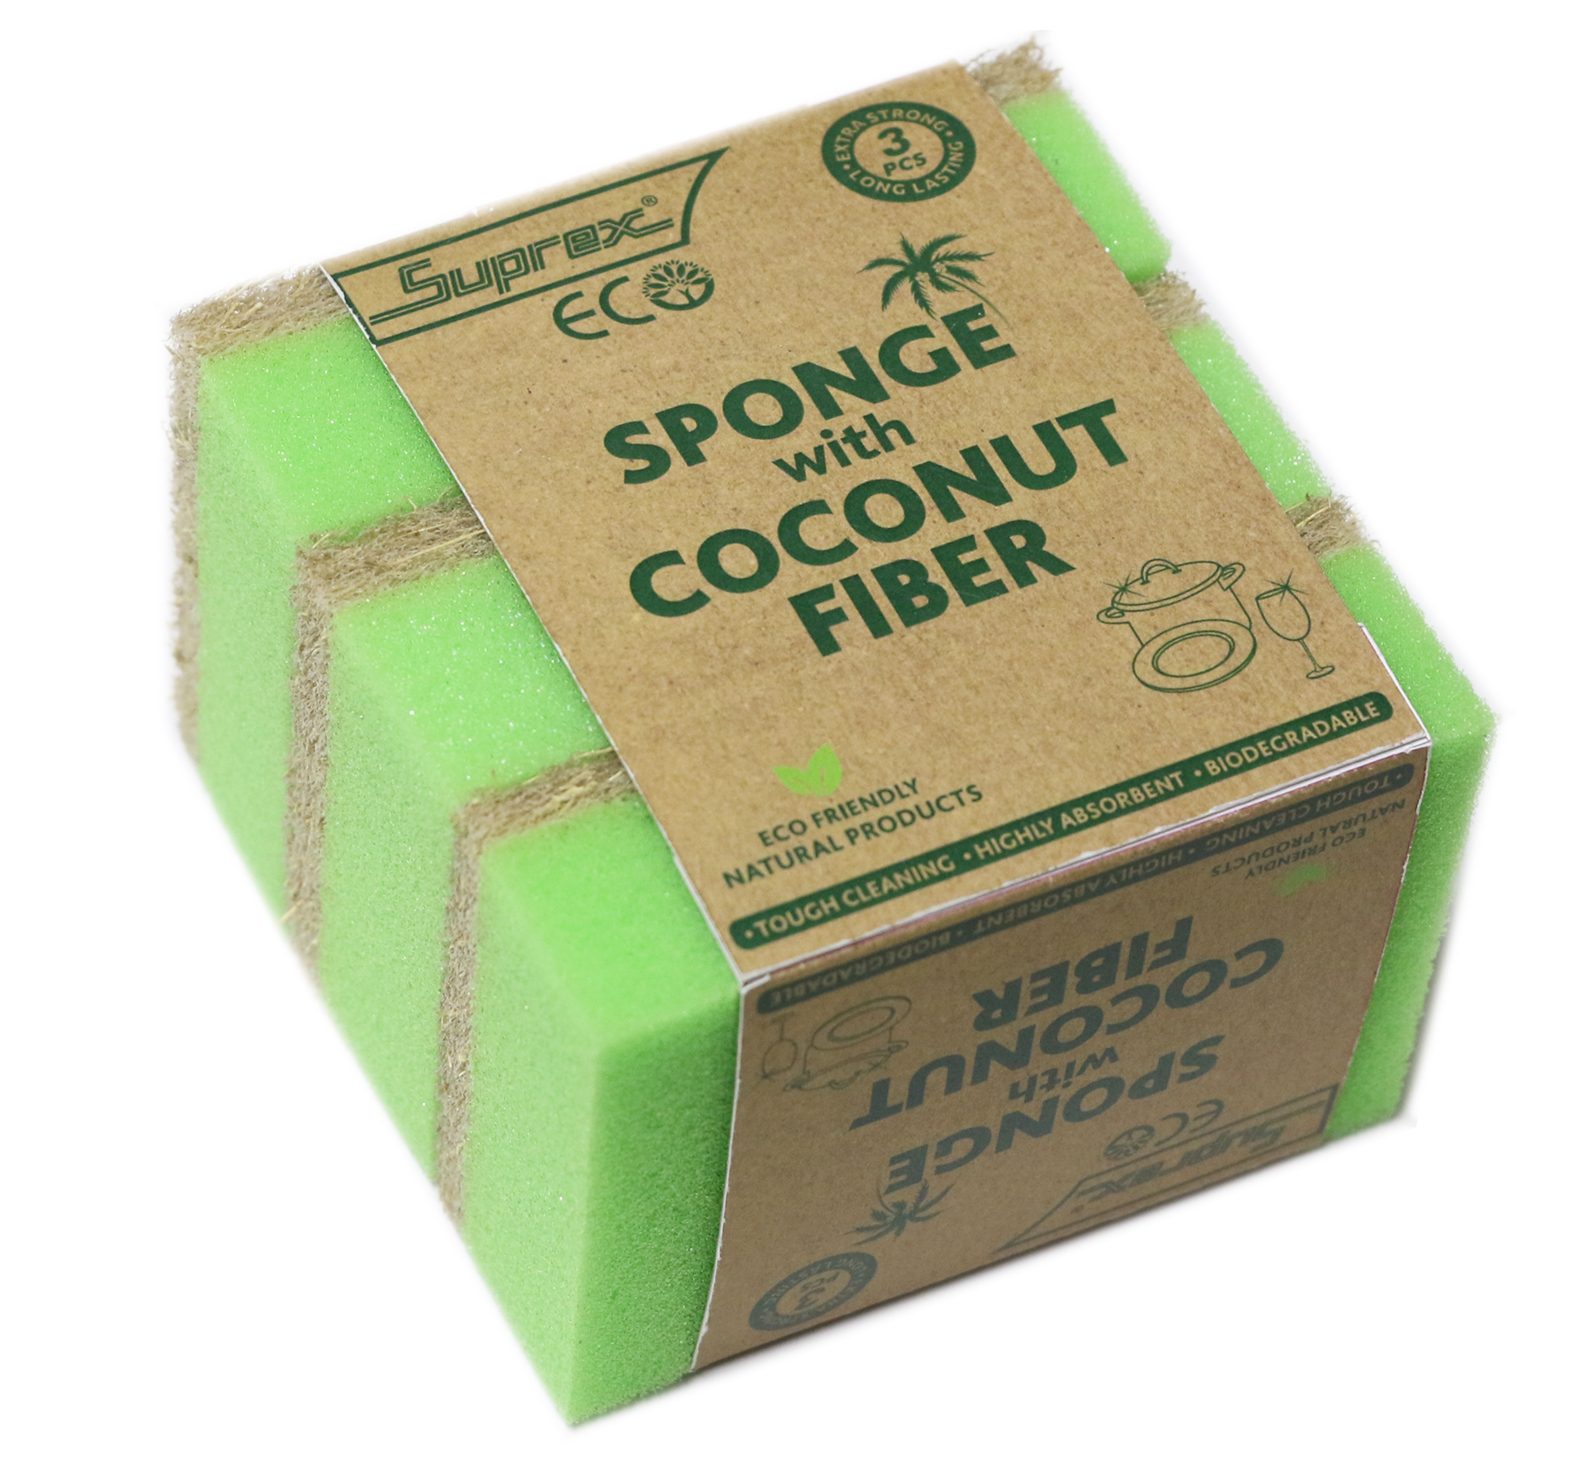 Sponge with coconut fiber